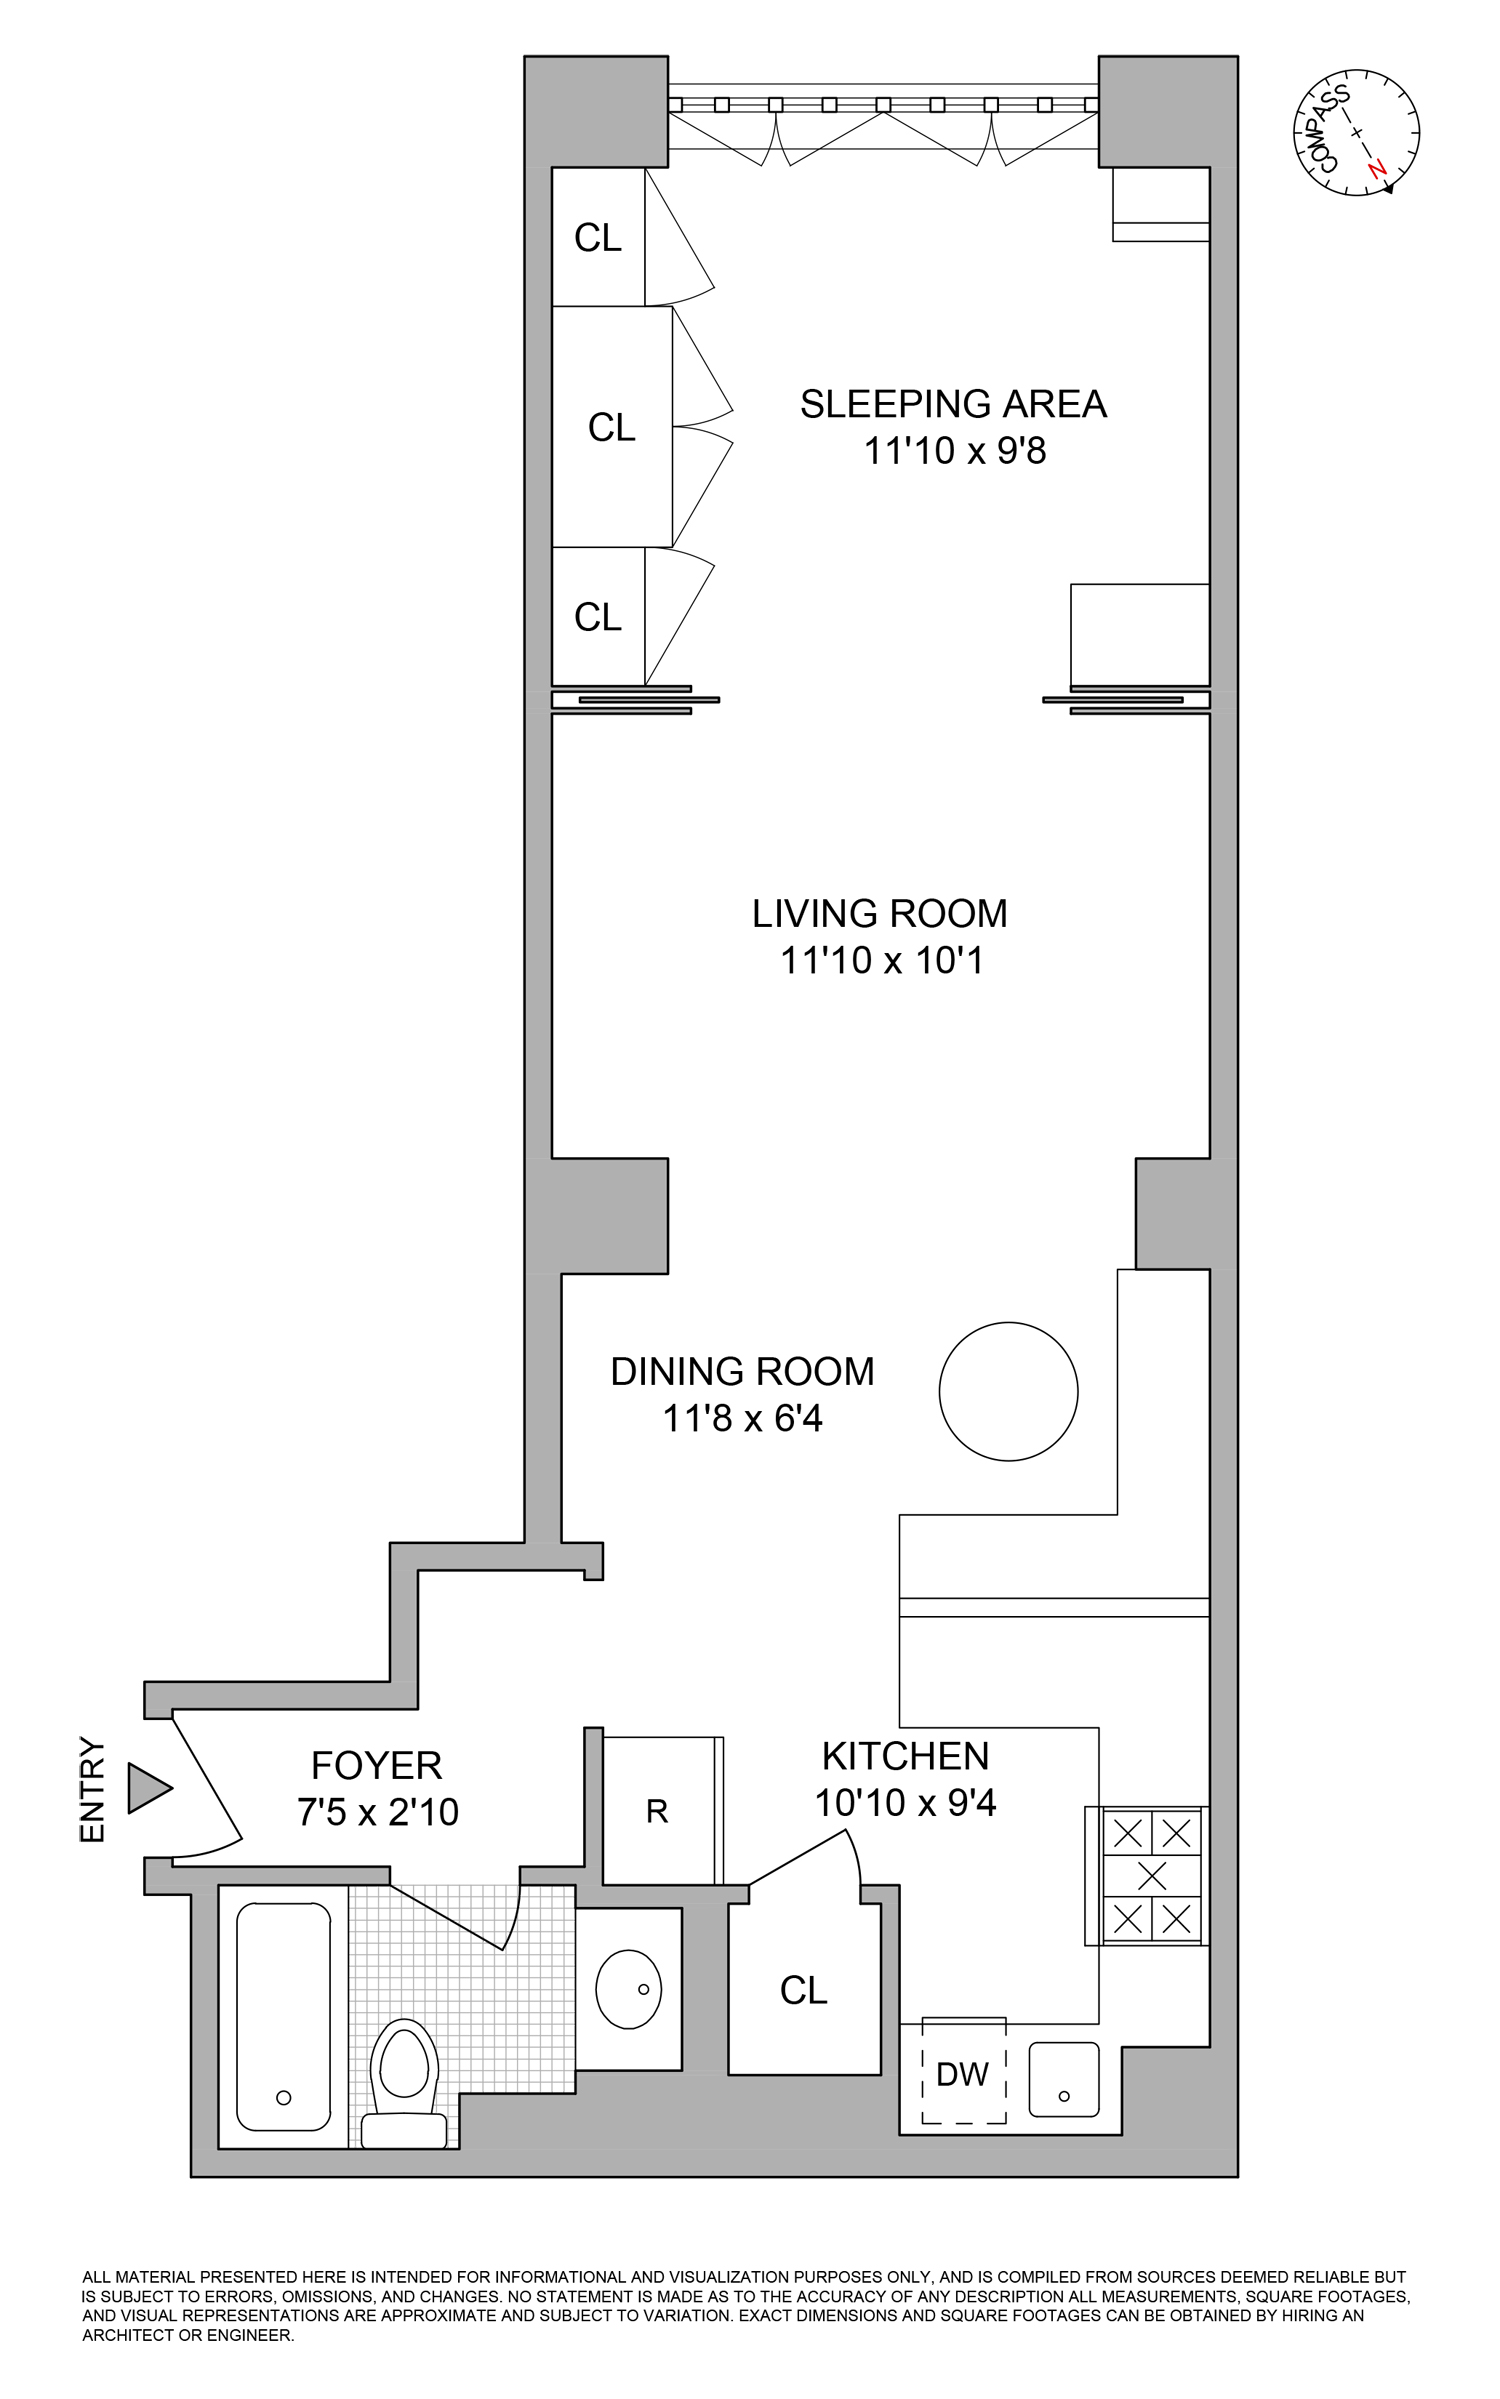 Floorplan for 320 East 42nd Street, 310